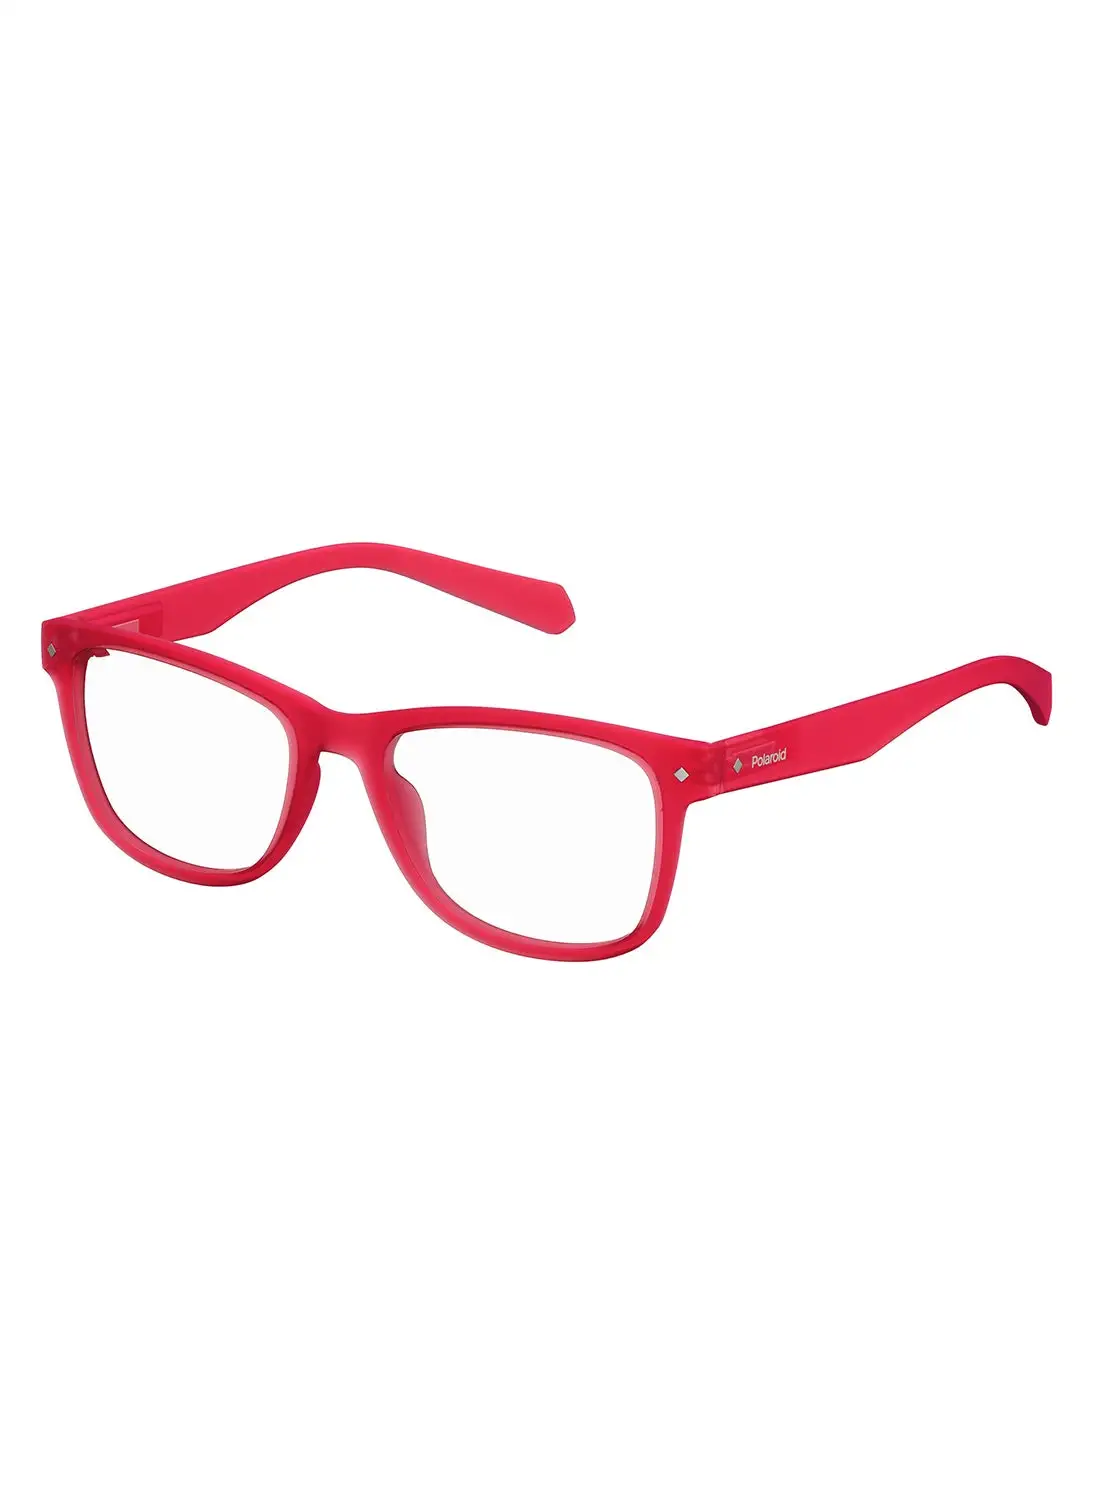 Polaroid Unisex Square Reading Glasses - Pld 0020/R Red 52 - Lens Size: 52 Mm